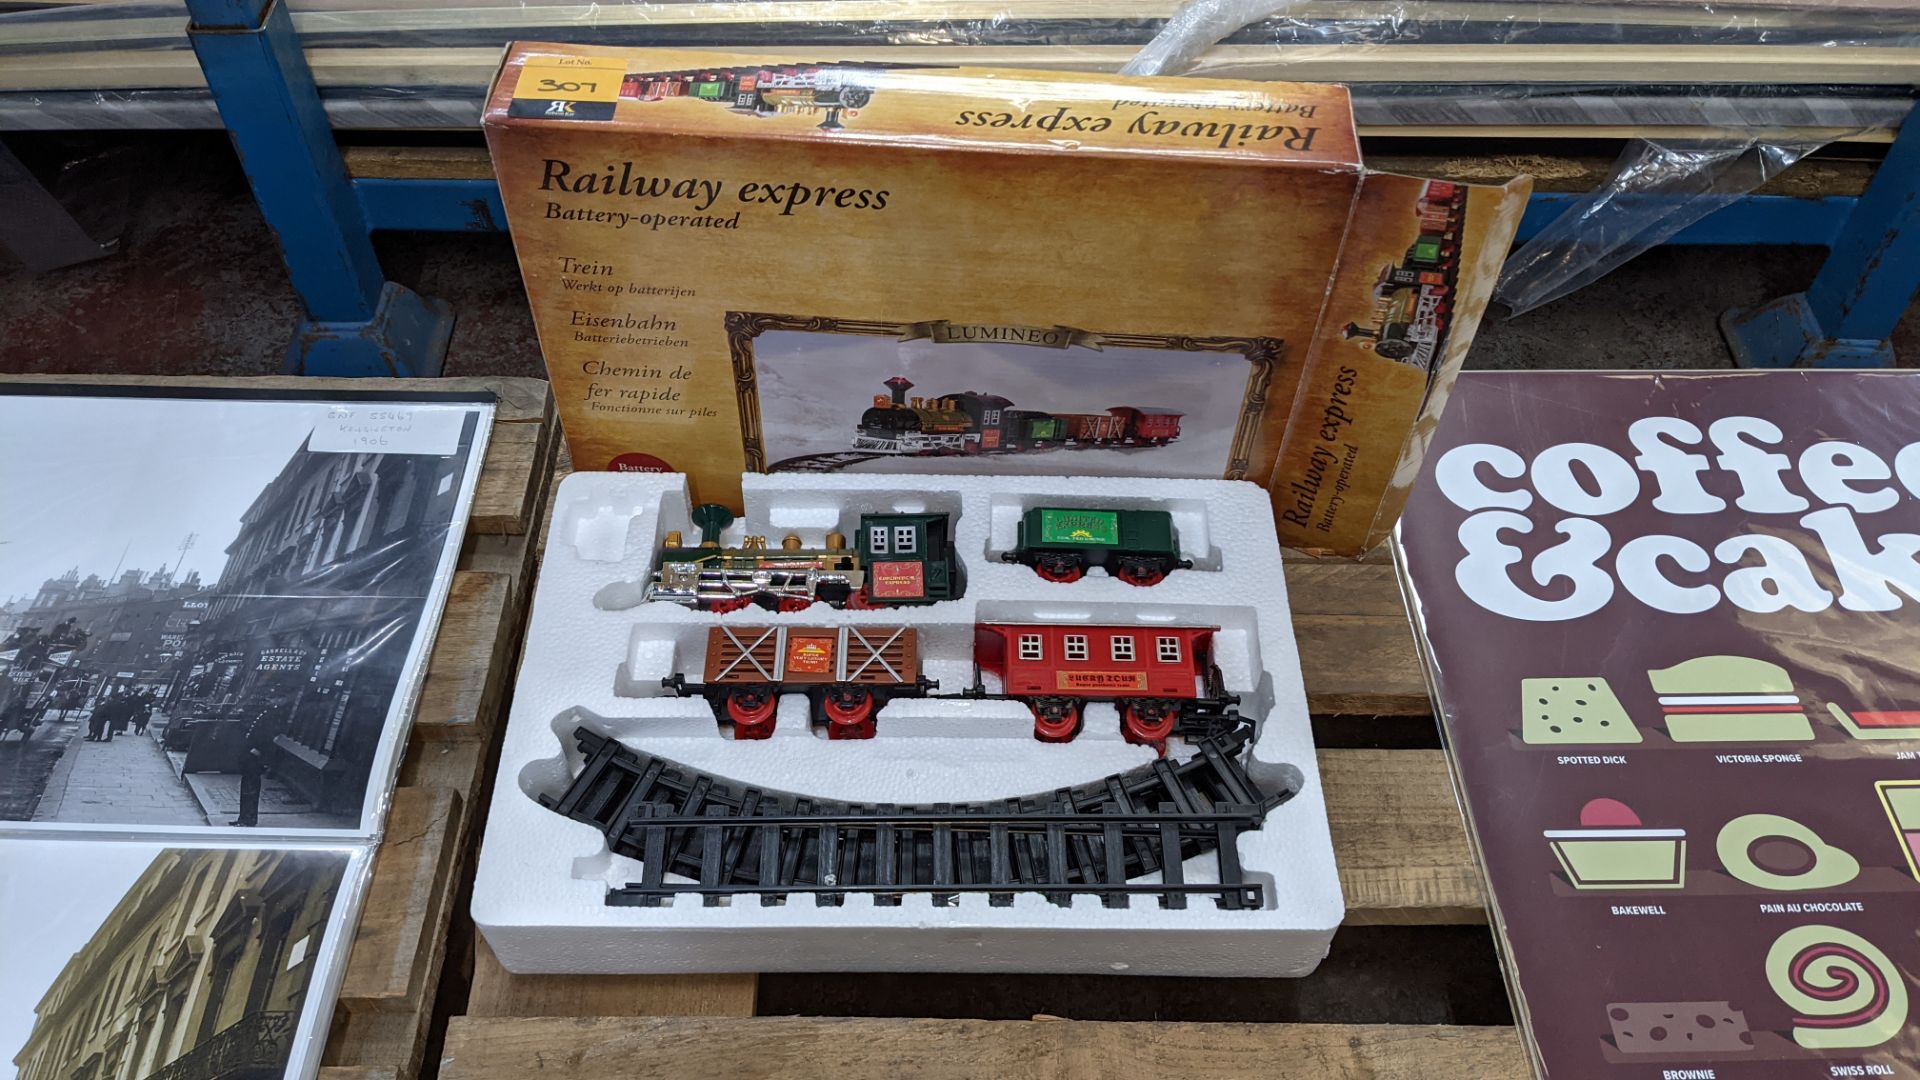 Battery operated Railway Express Lumineo trainset - Image 2 of 5